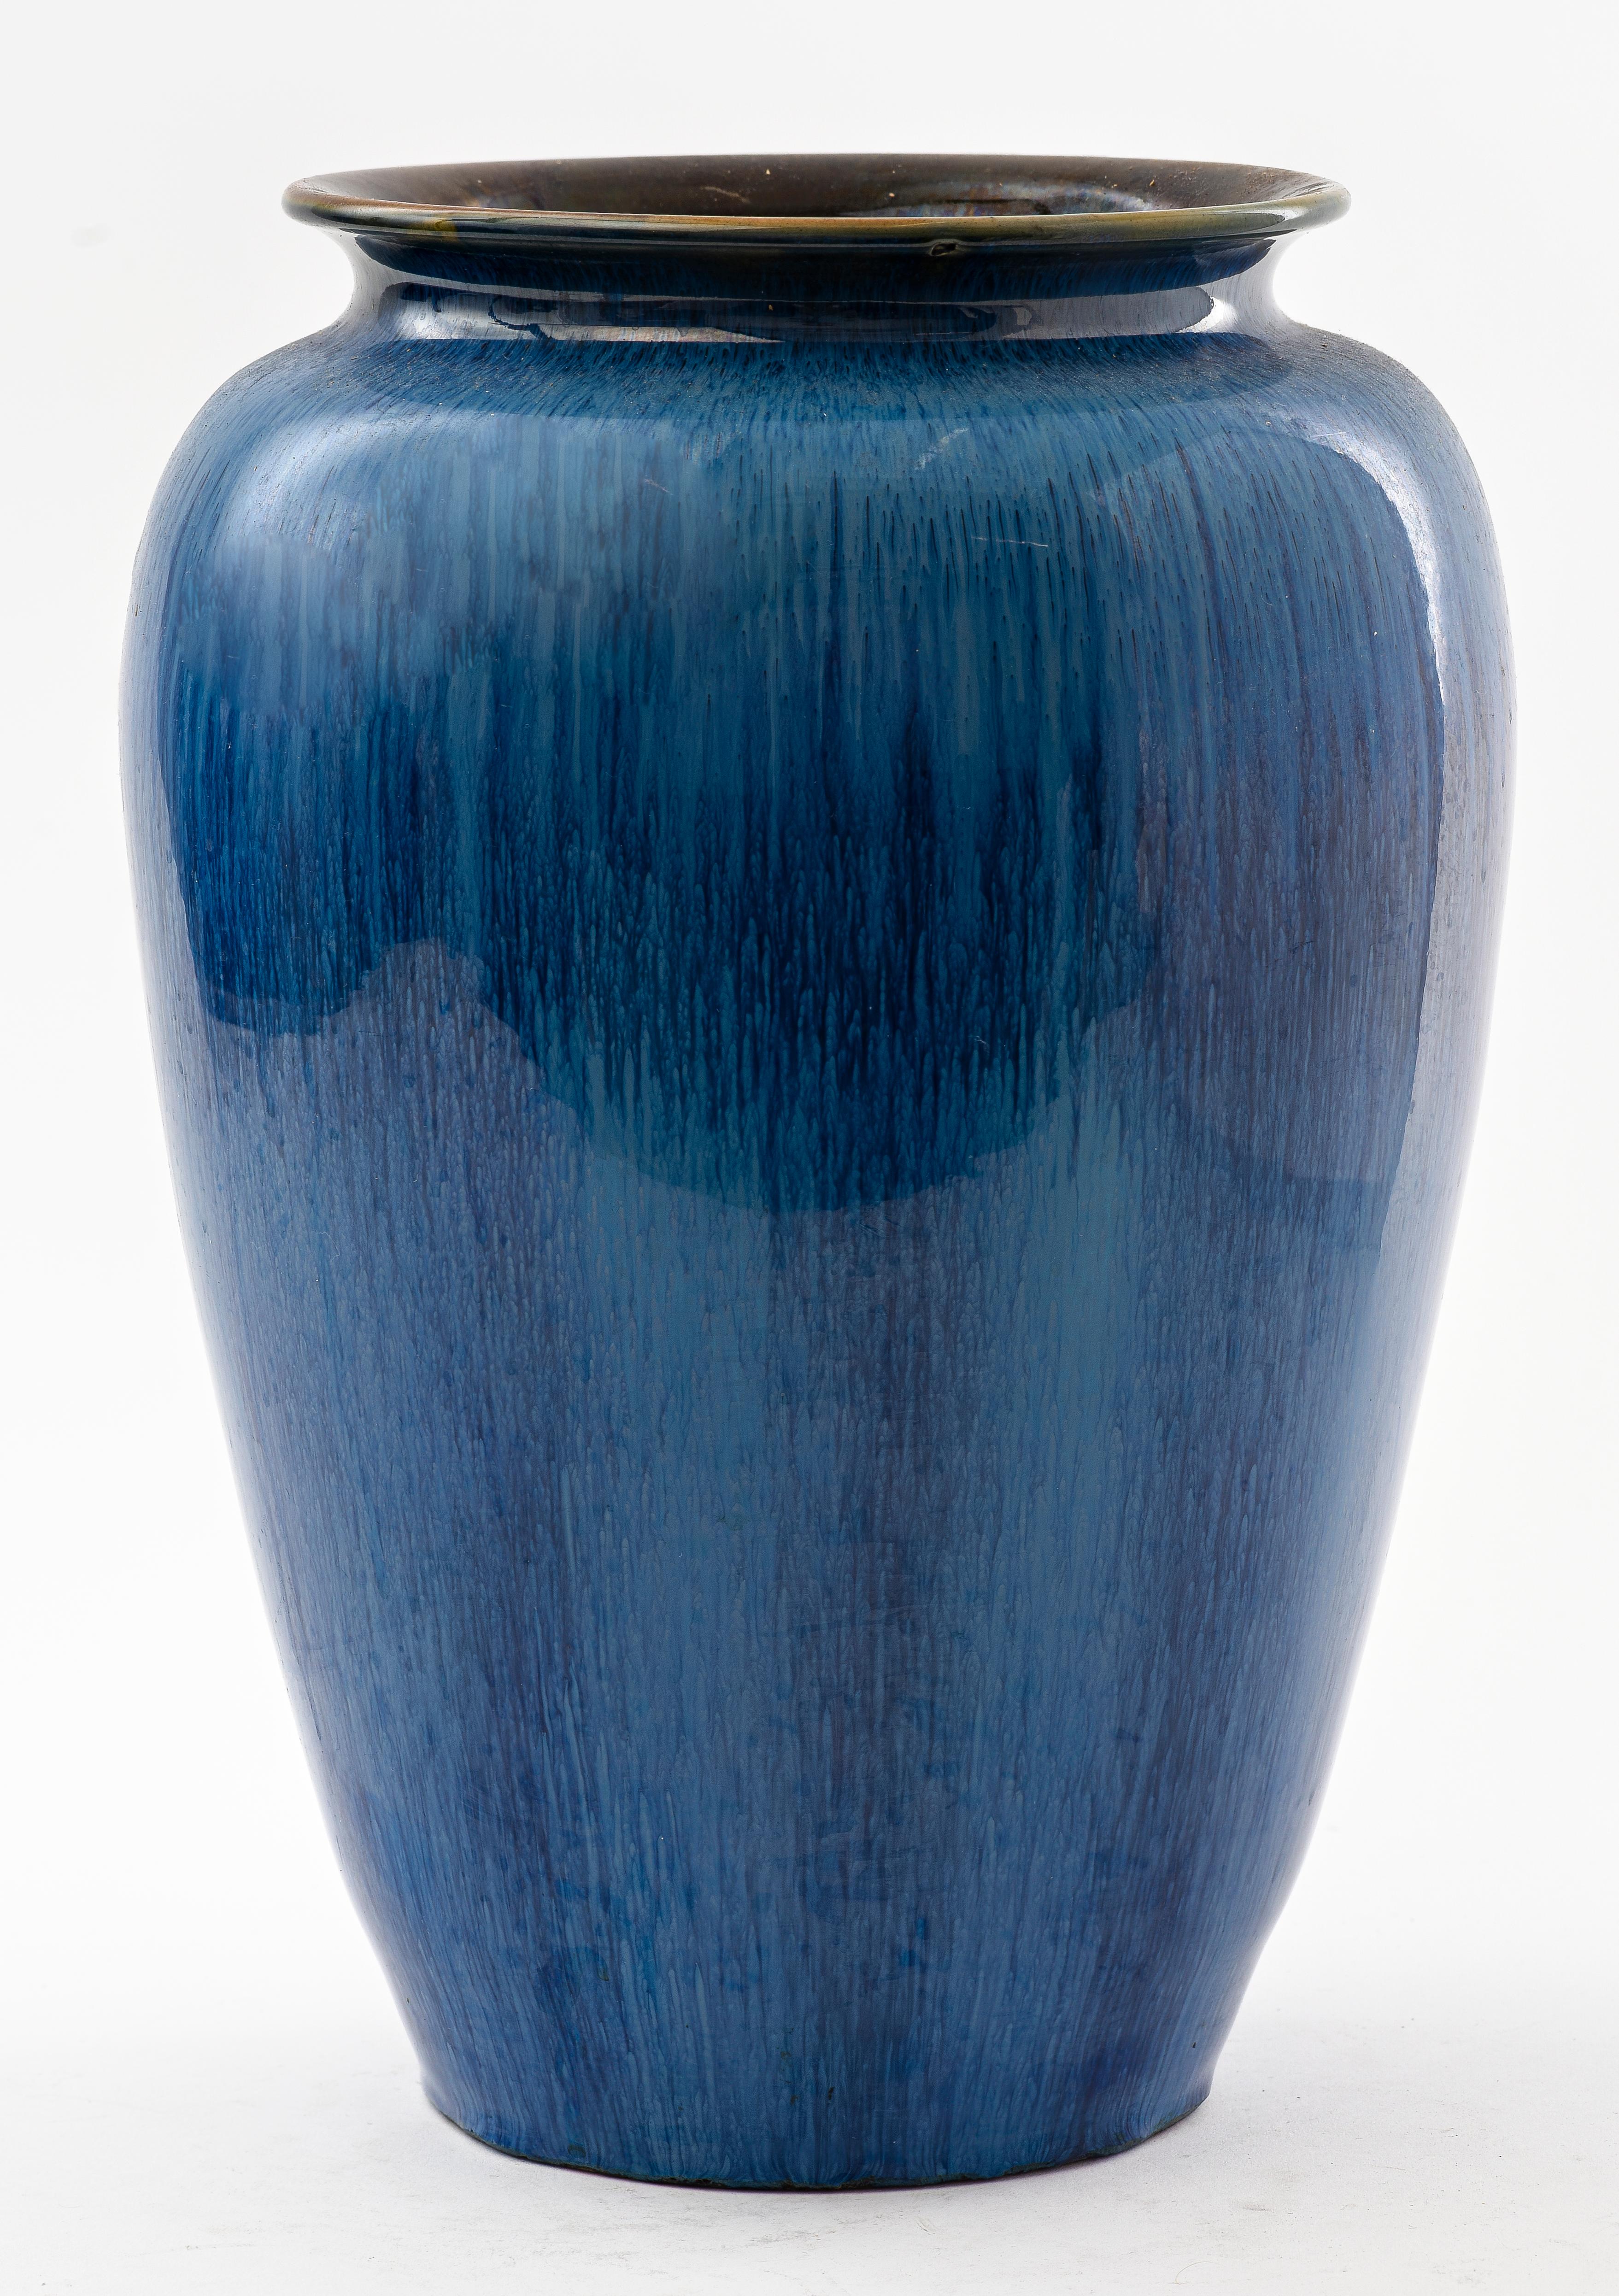 Bourne Denby English blue glazed pottery large vase, marked on the bottom. Measures: 12